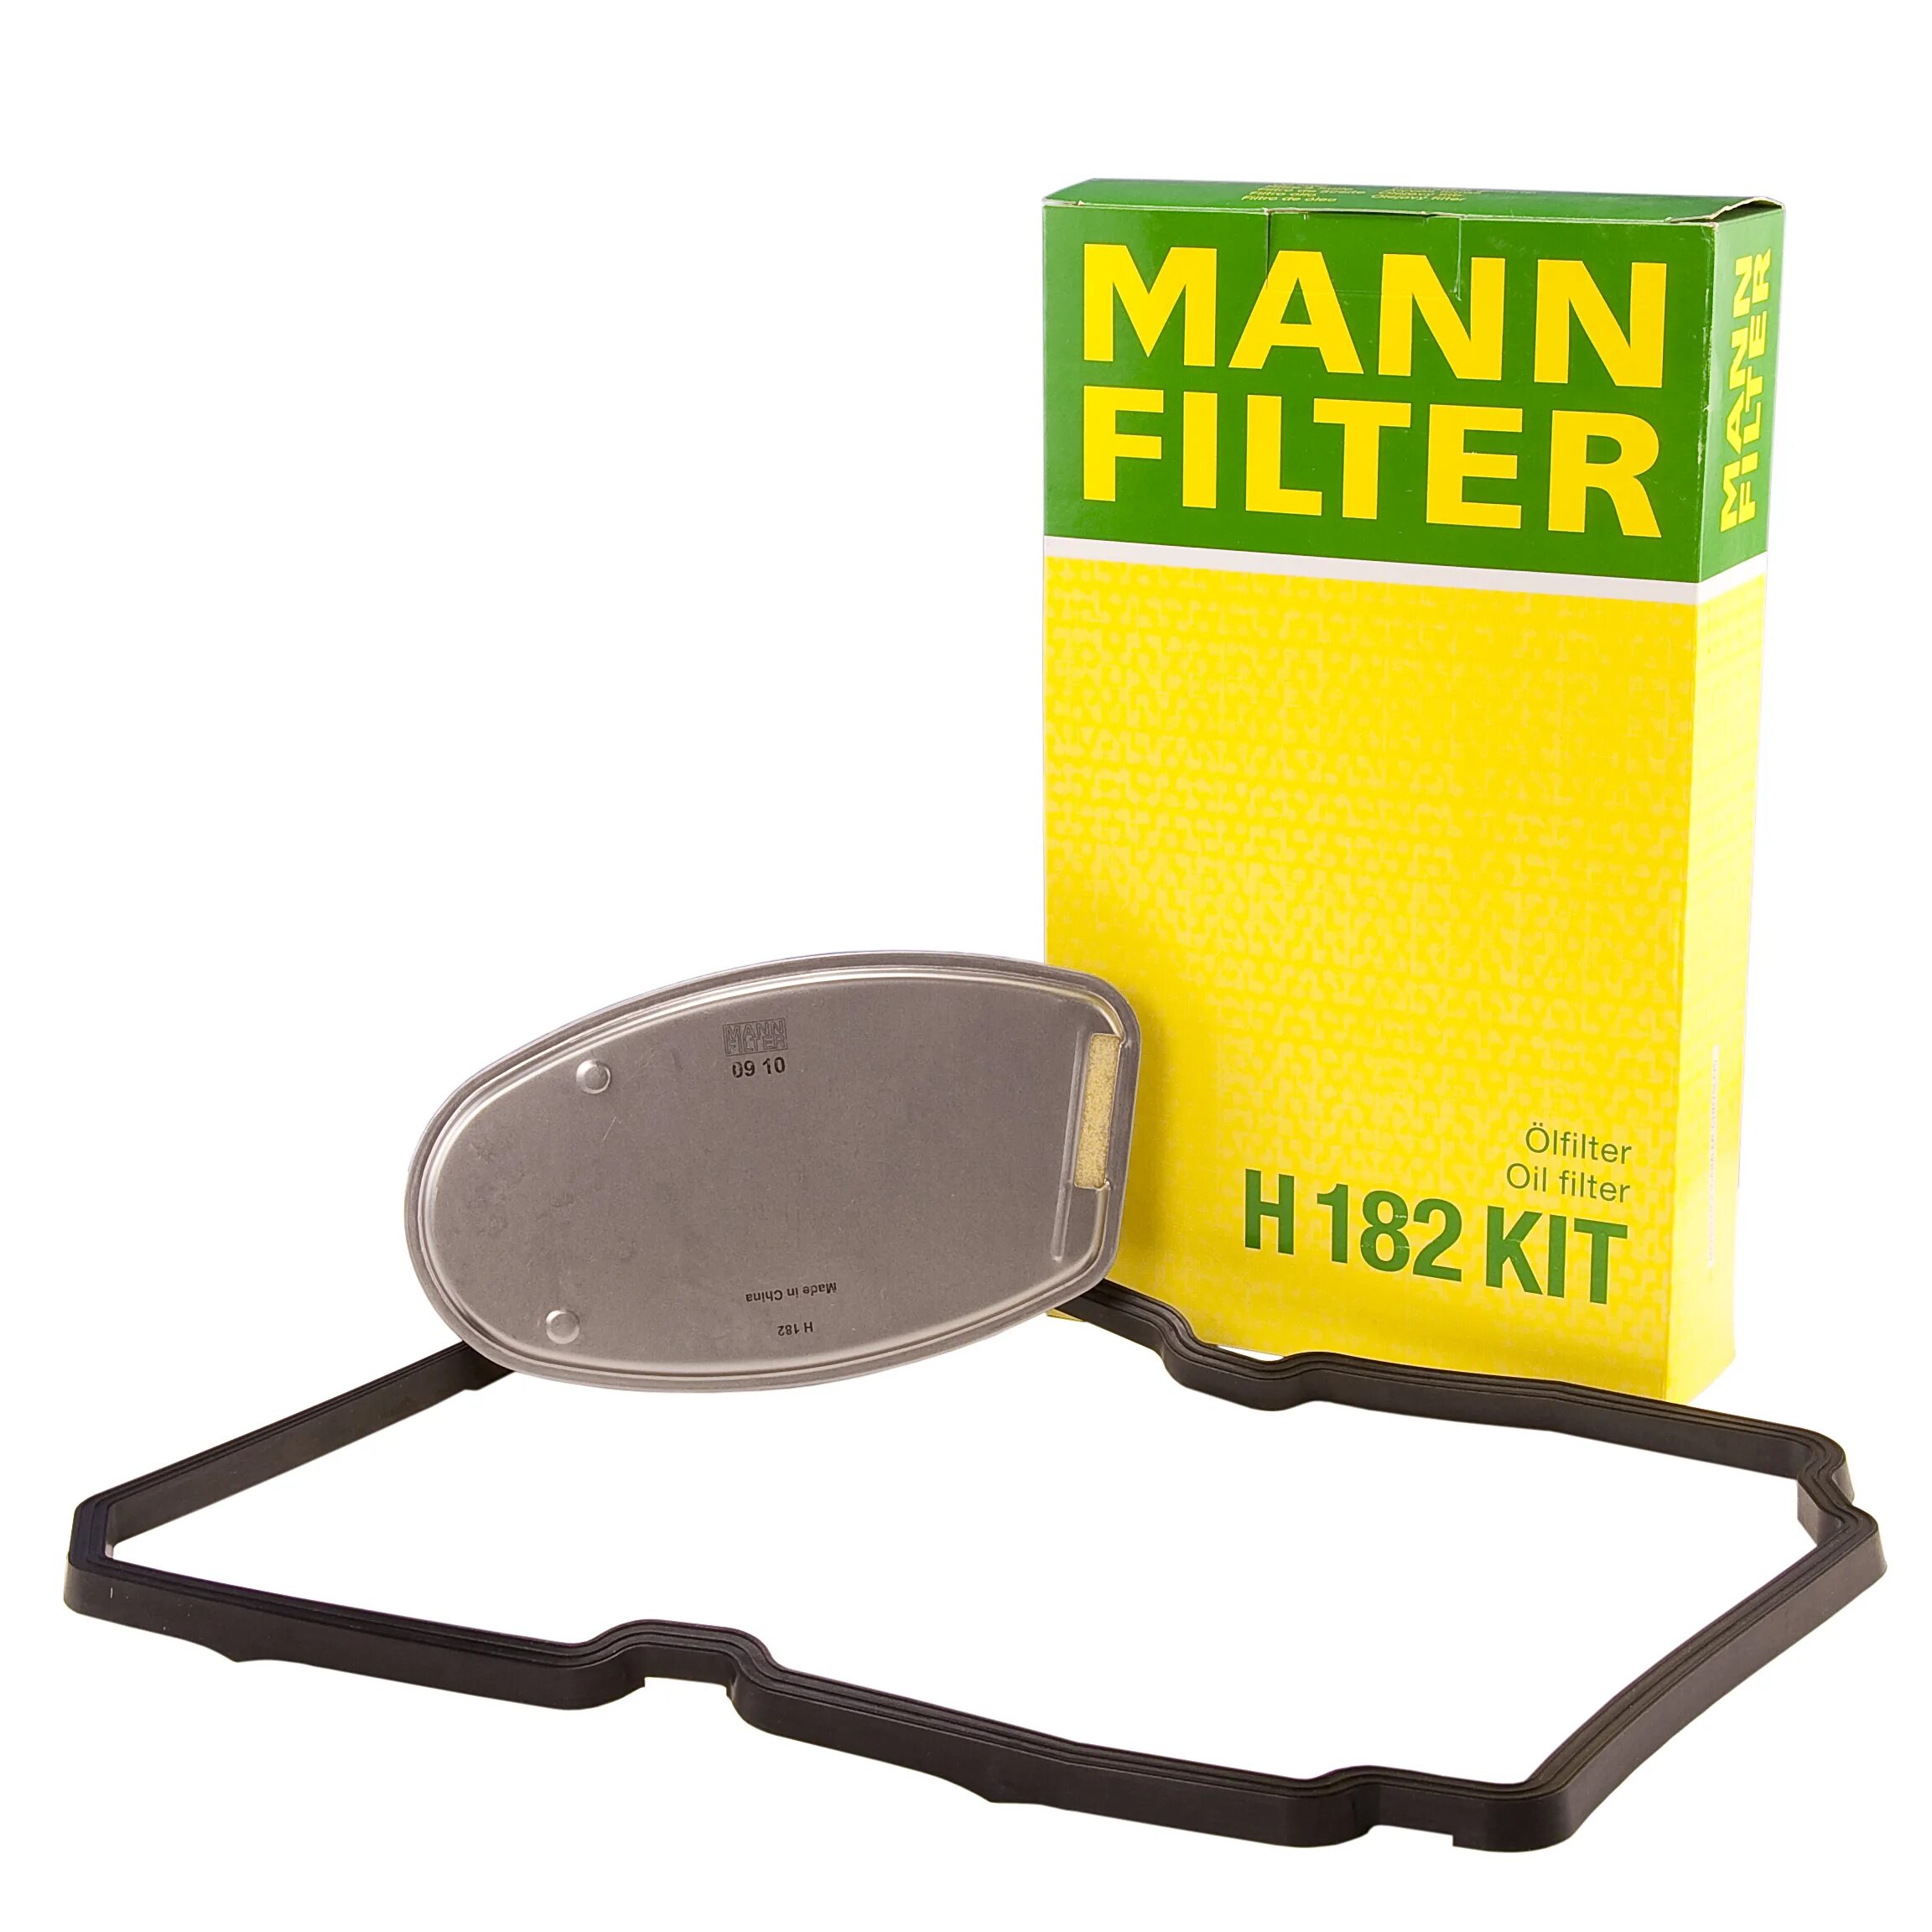 H filter. H182kit Mann-Filter фильтр масляный АКПП. Mann фильтр АКПП h182kit. H 182 Kit фильтр АКПП. H182kit Mann Применяемость.